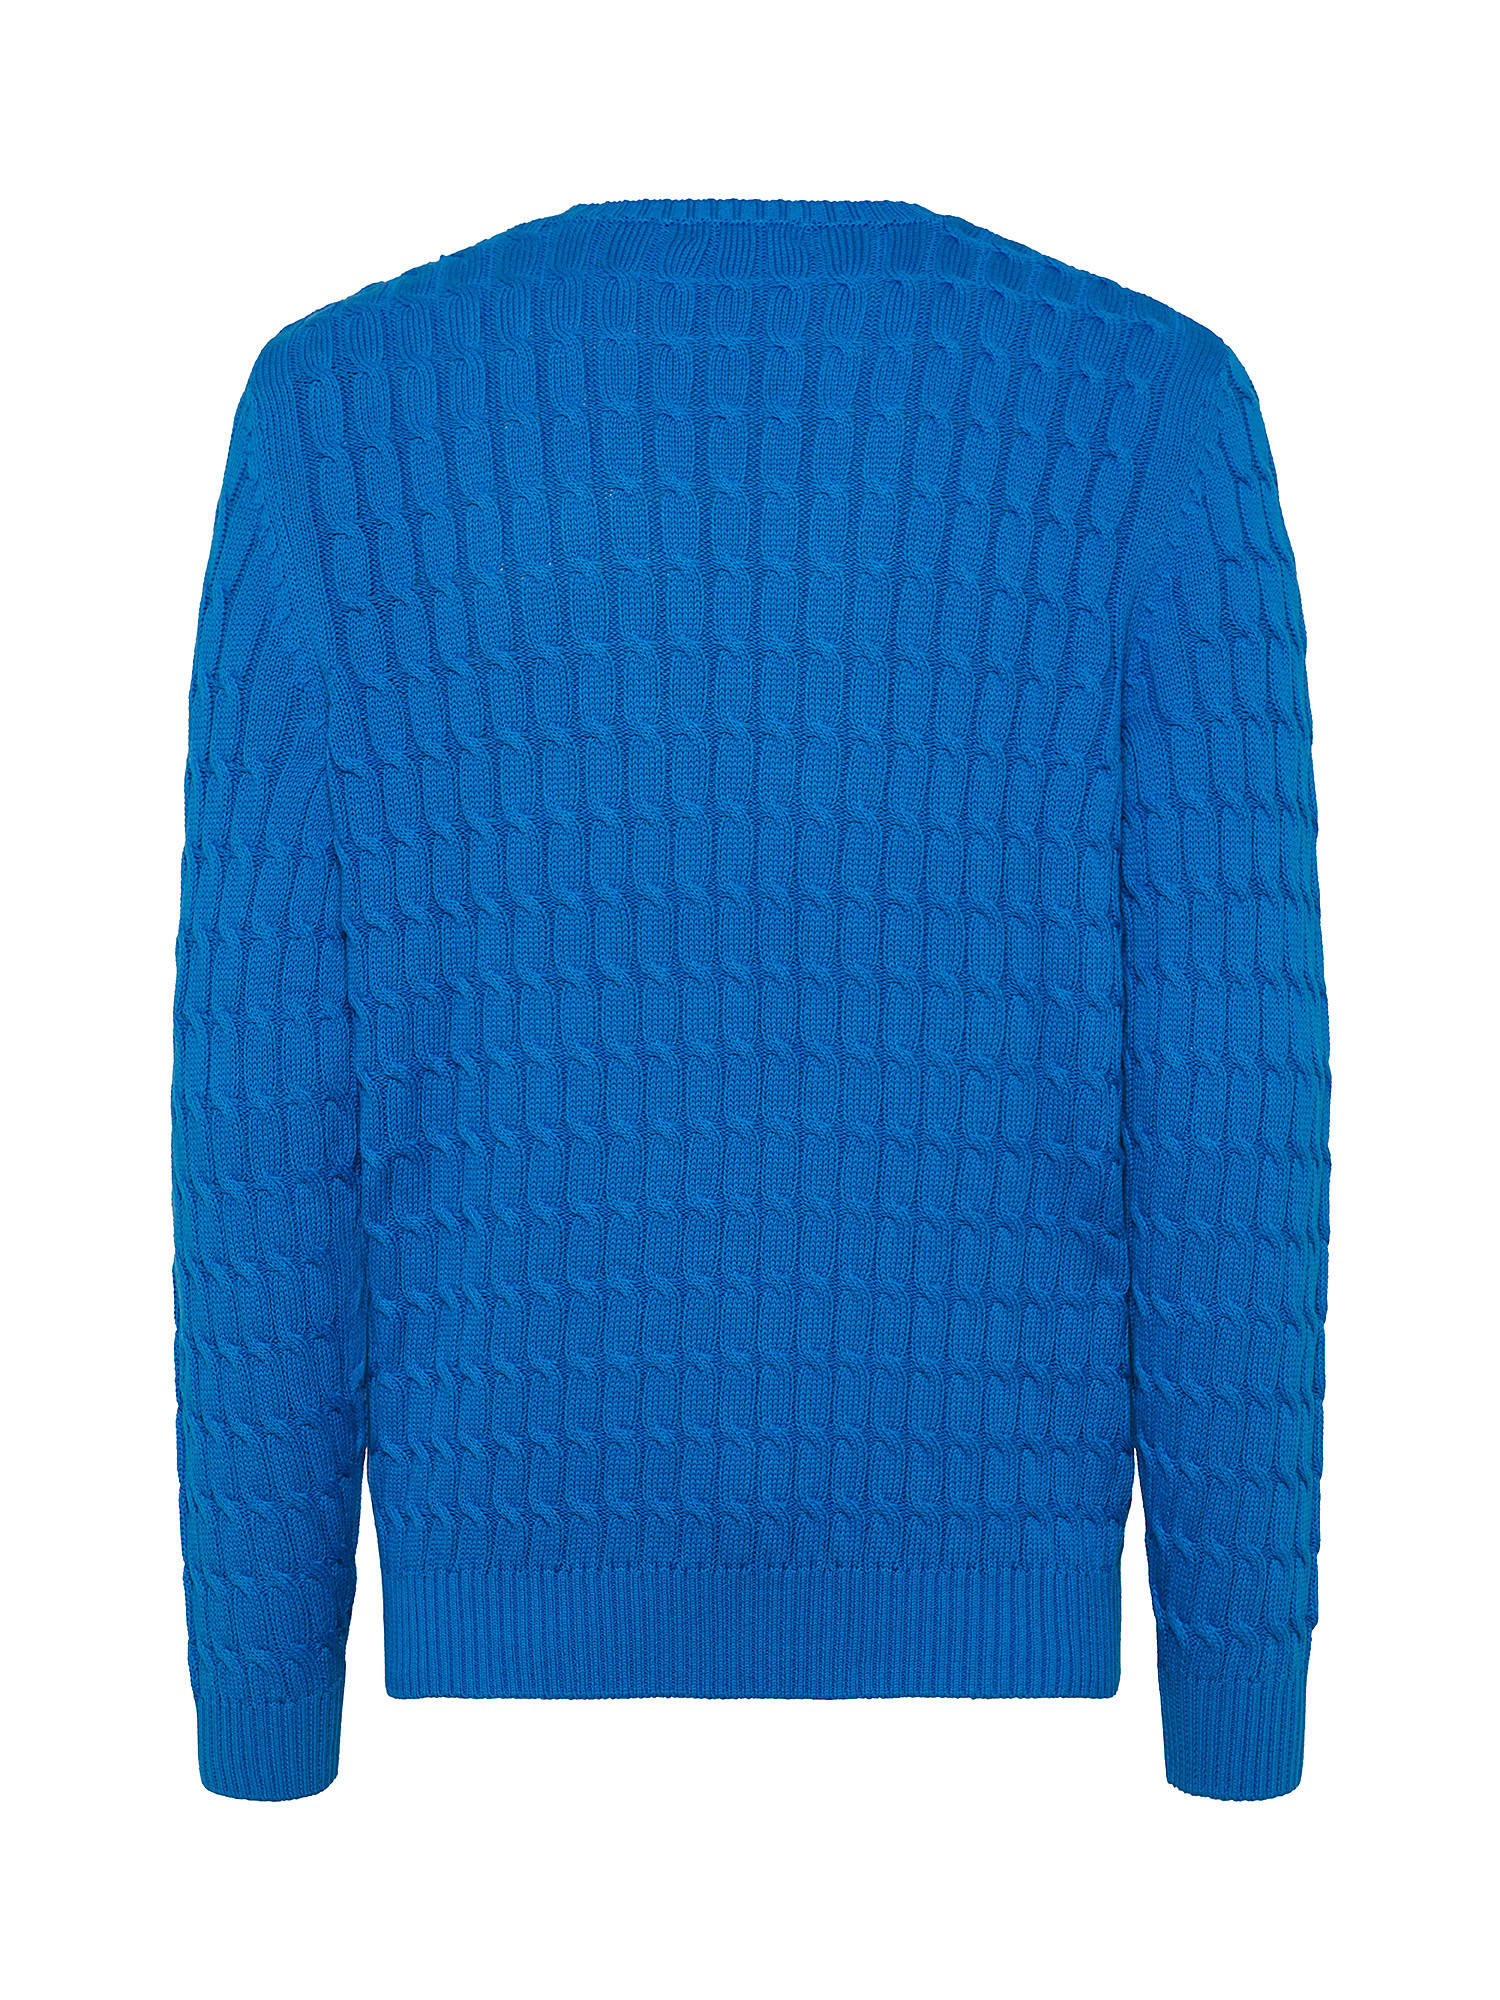 Luca D'Altieri - Crewneck sweater with pure cotton braids, Blue Cornflower, large image number 1